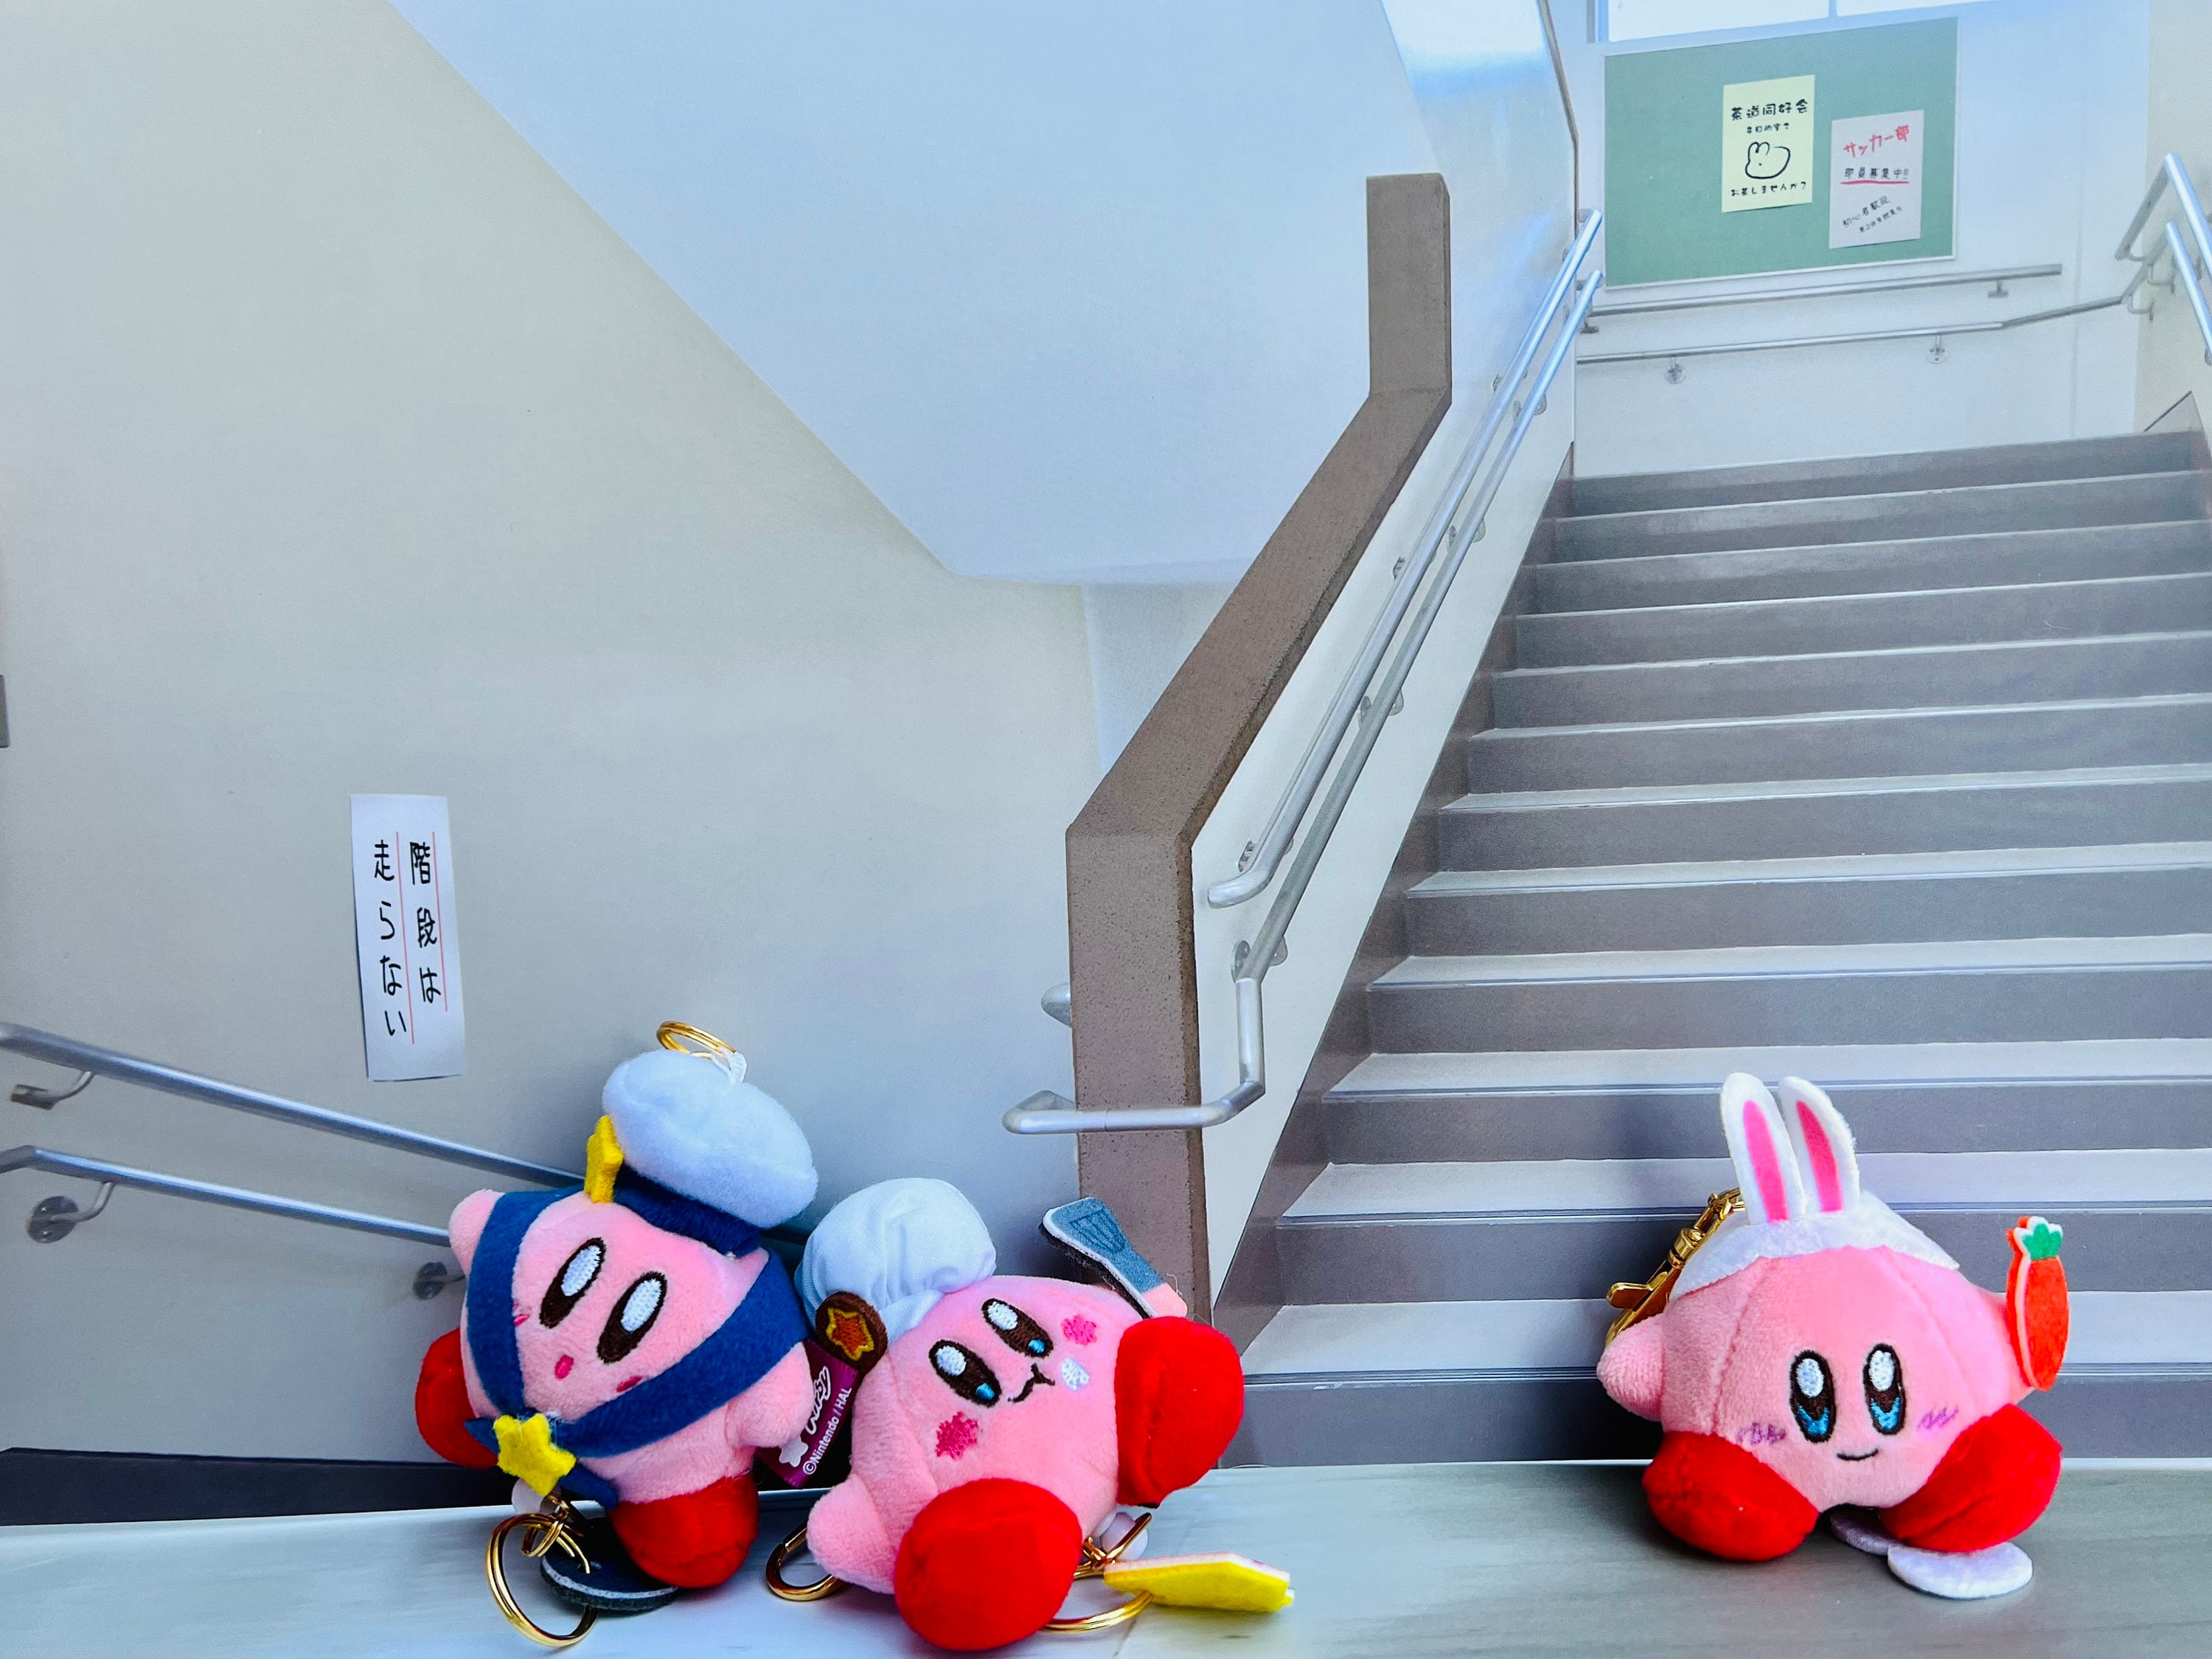 Peluche Kirby - Comprar en Gochiso productos japoneses